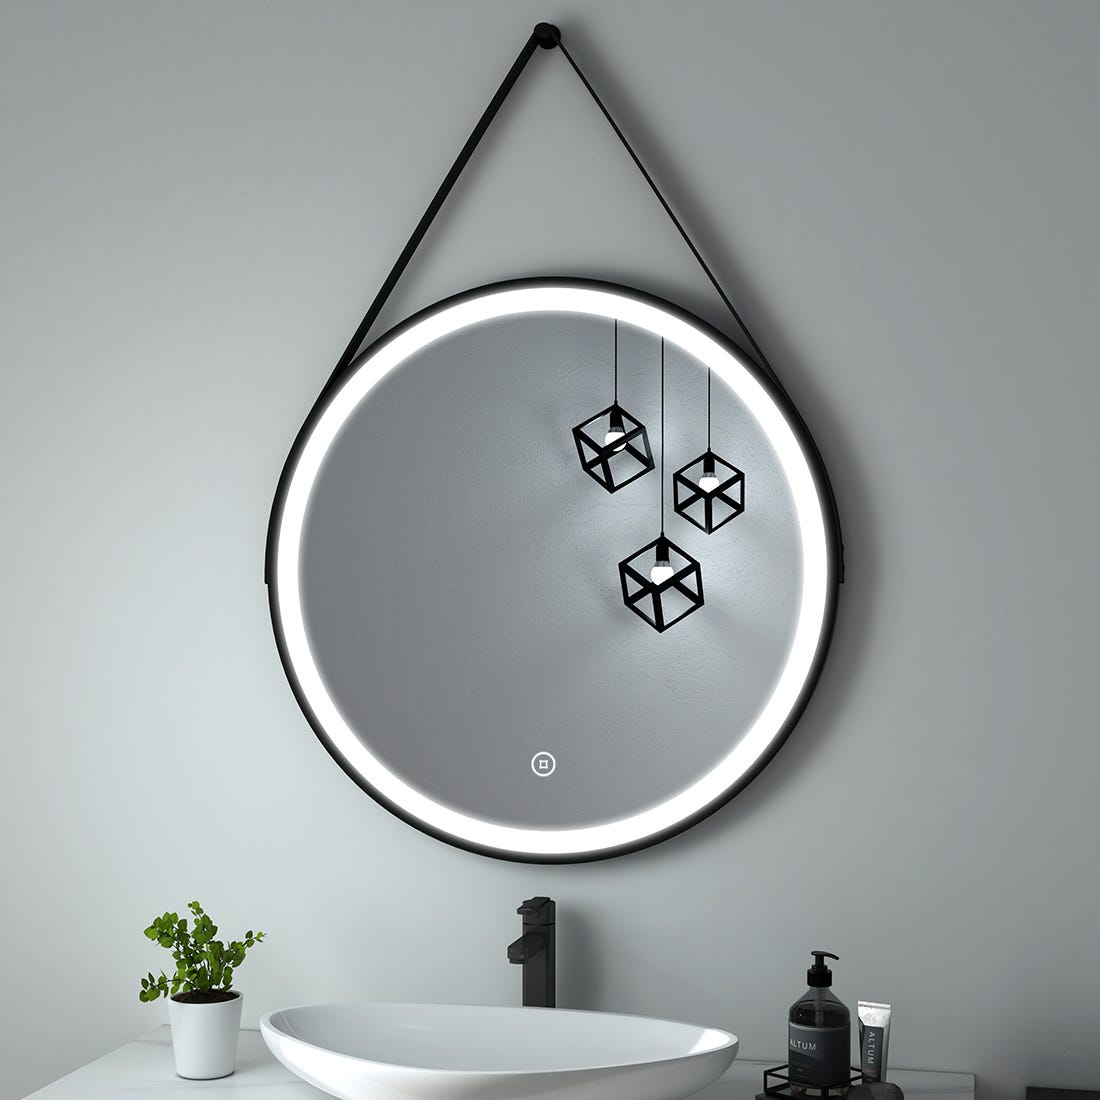 Eclairage salle de bain miroir noir-cuivre IP44 dimmable 3000-6500K